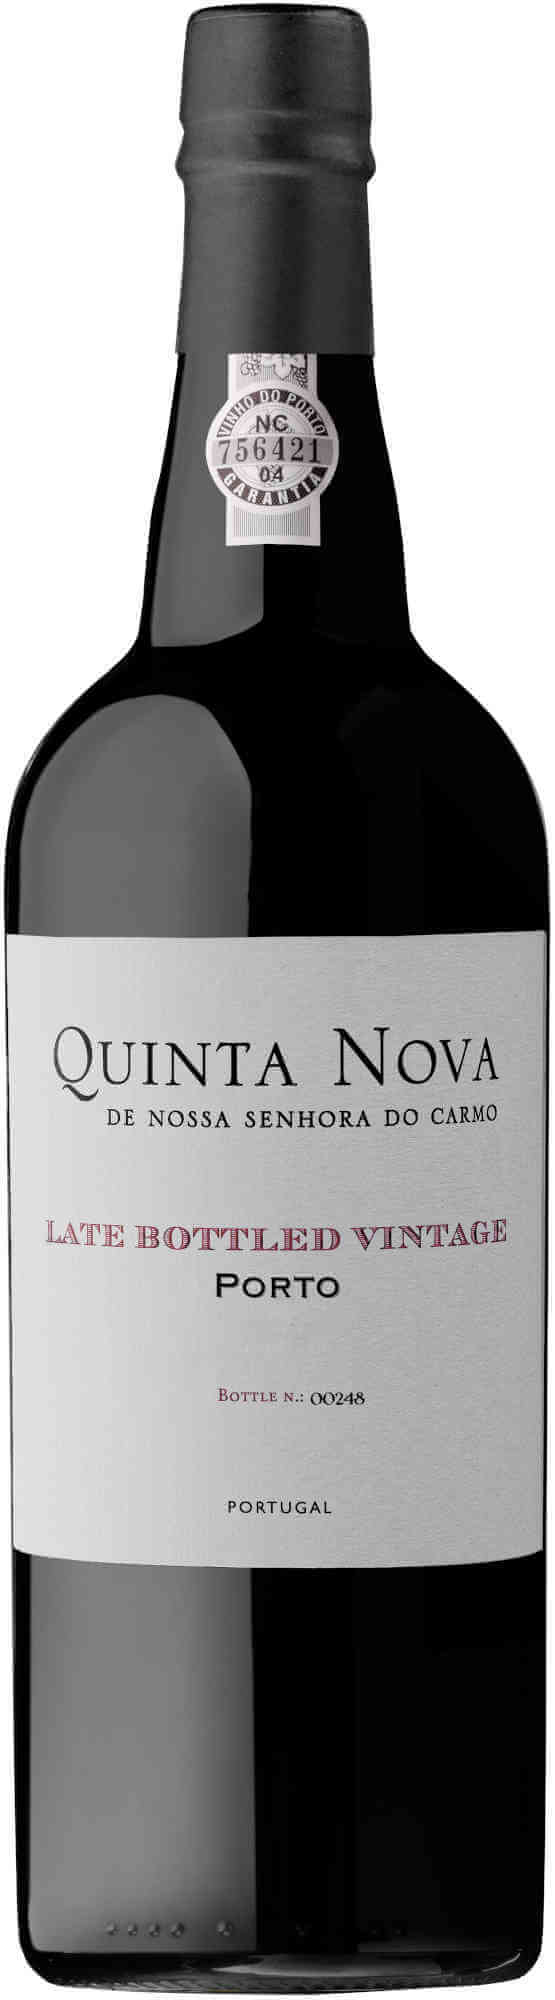 Quinta-Nova-LBV-Port